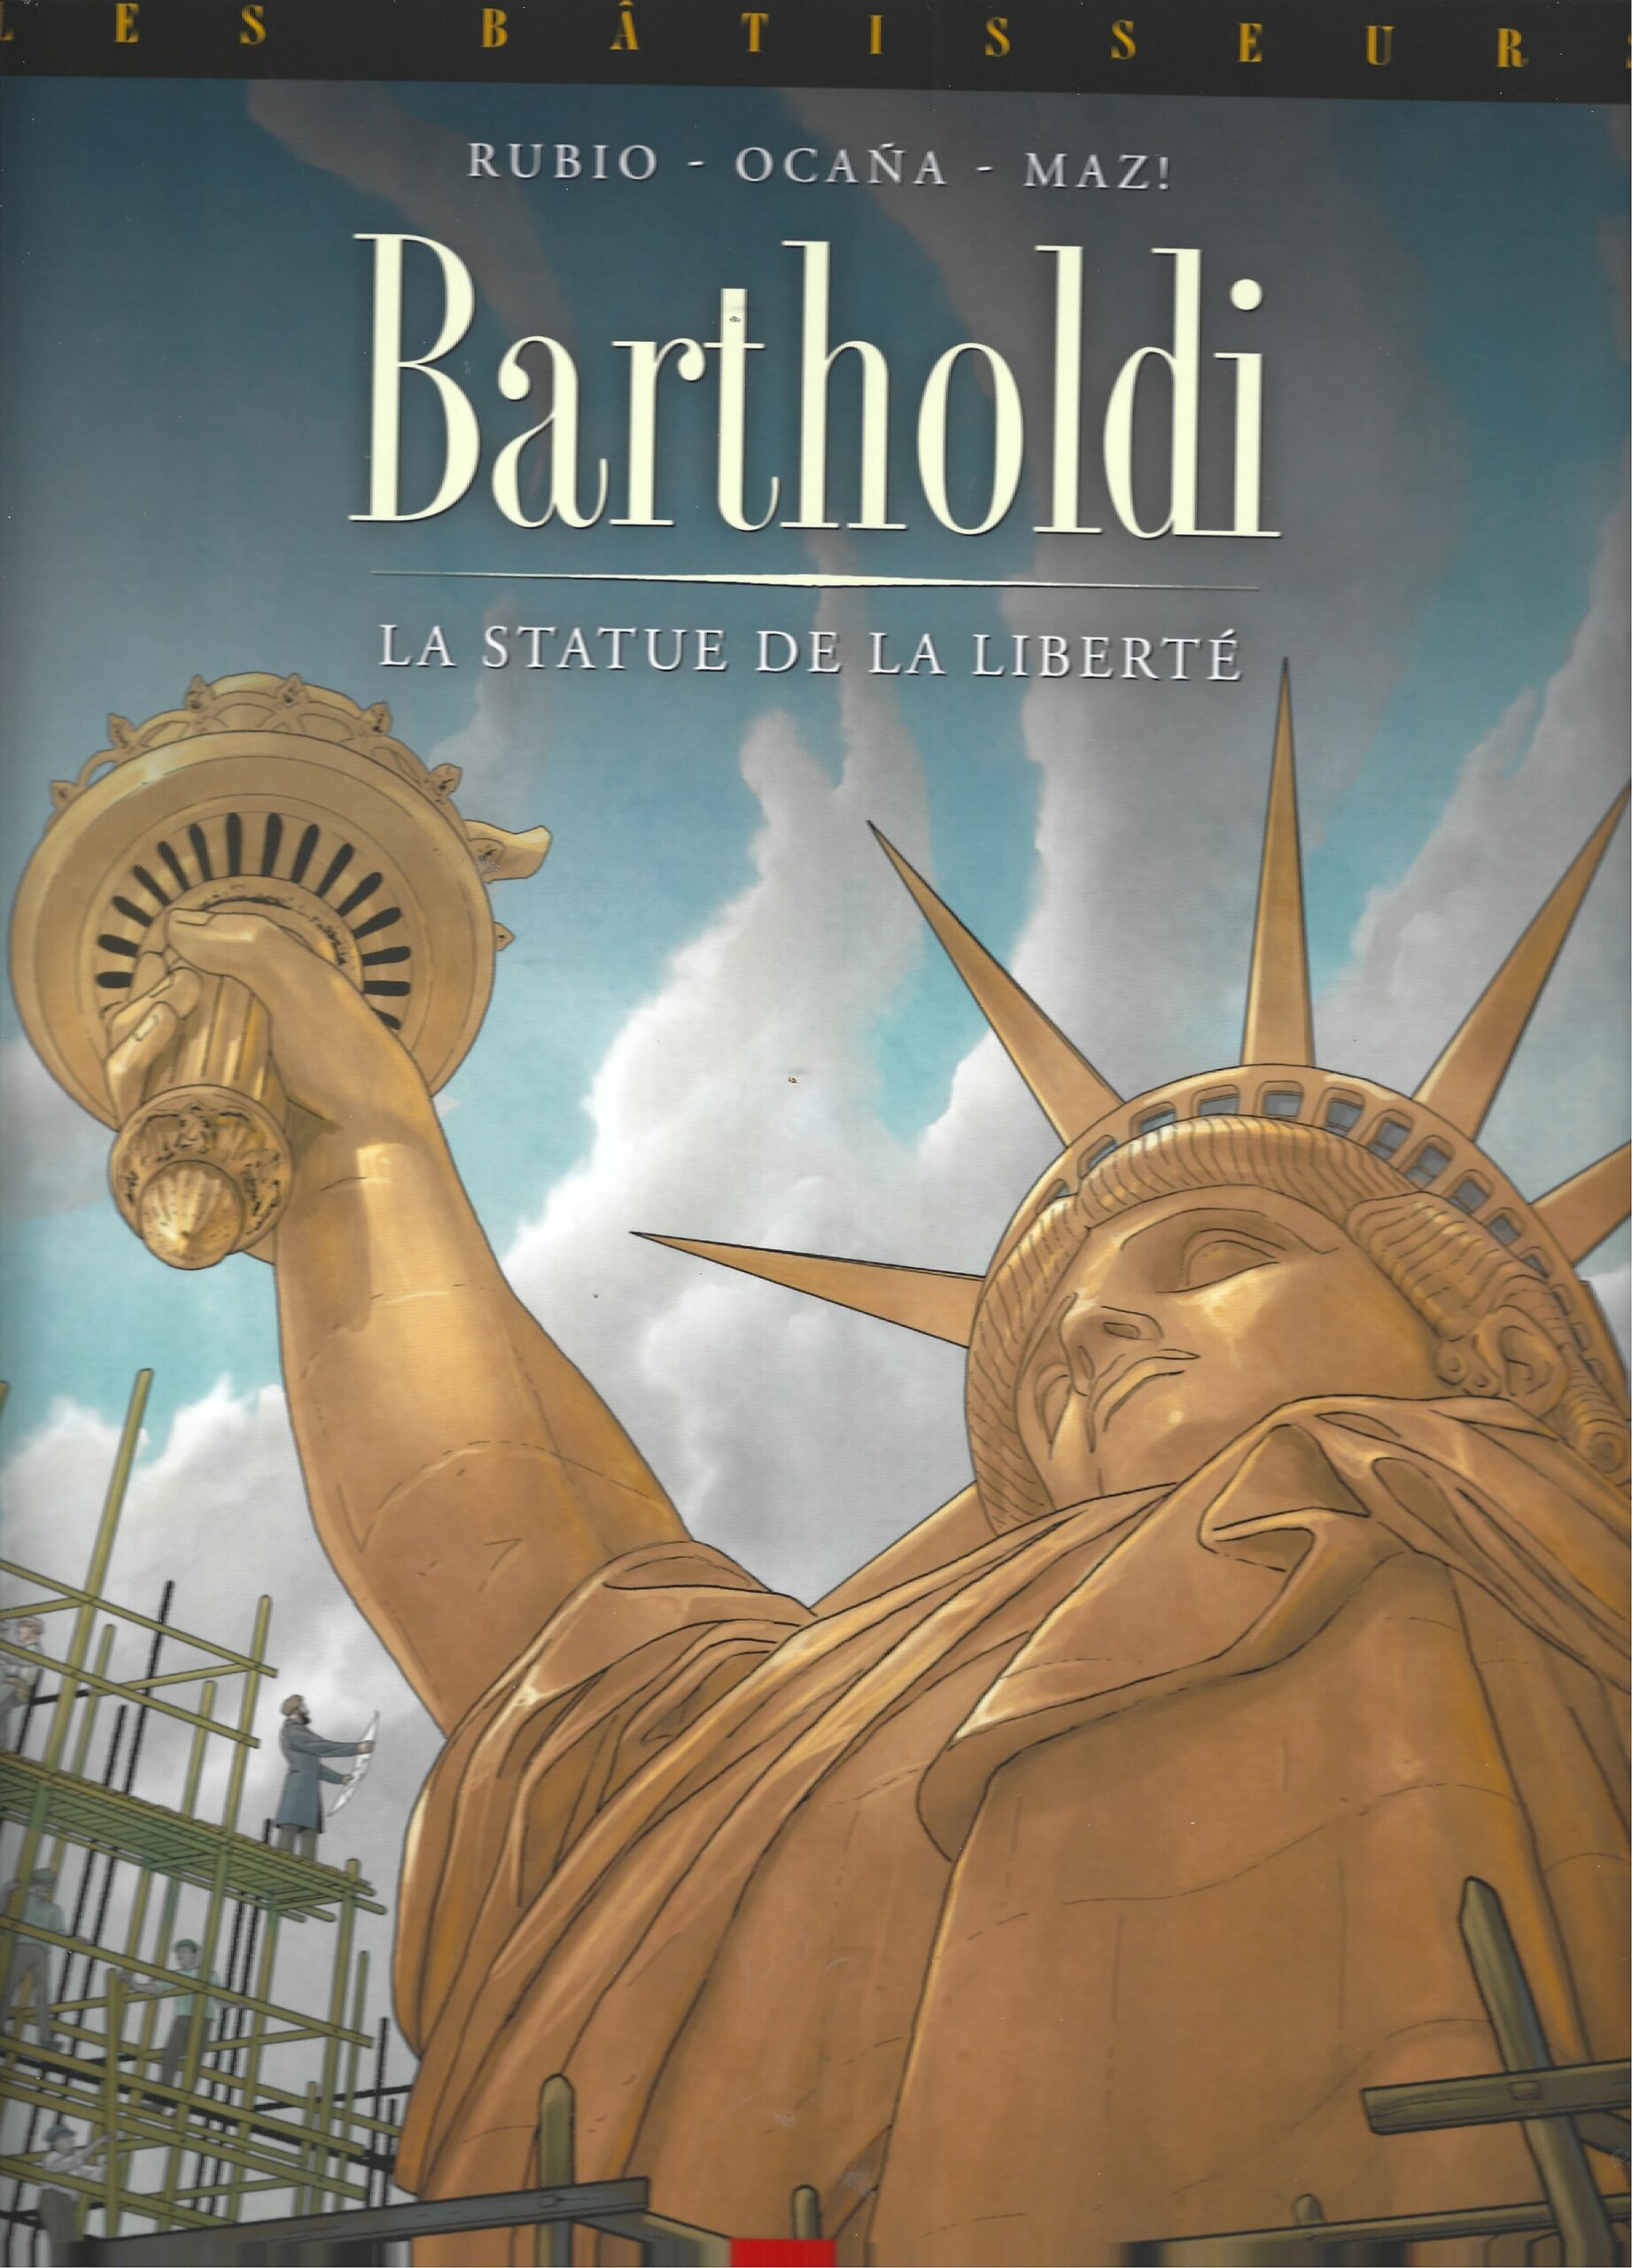 Bartholdi delcourt 14 06